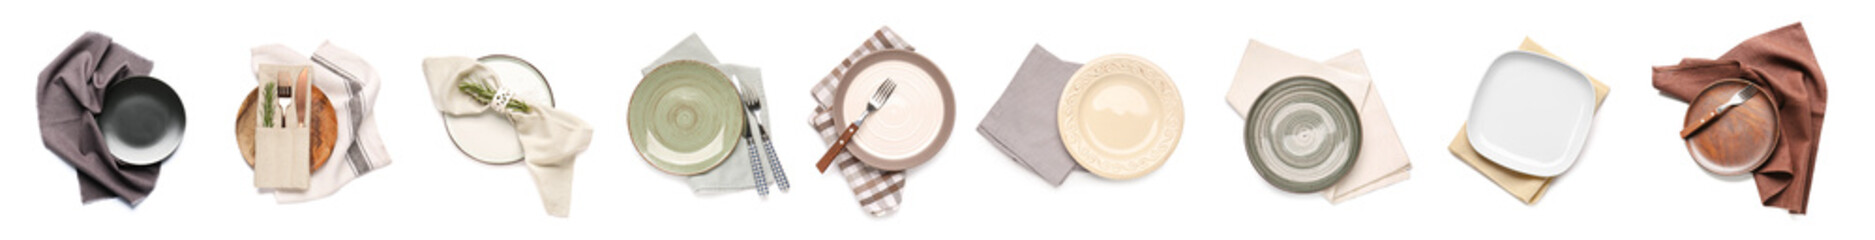 Plate with stylish napkin on white background